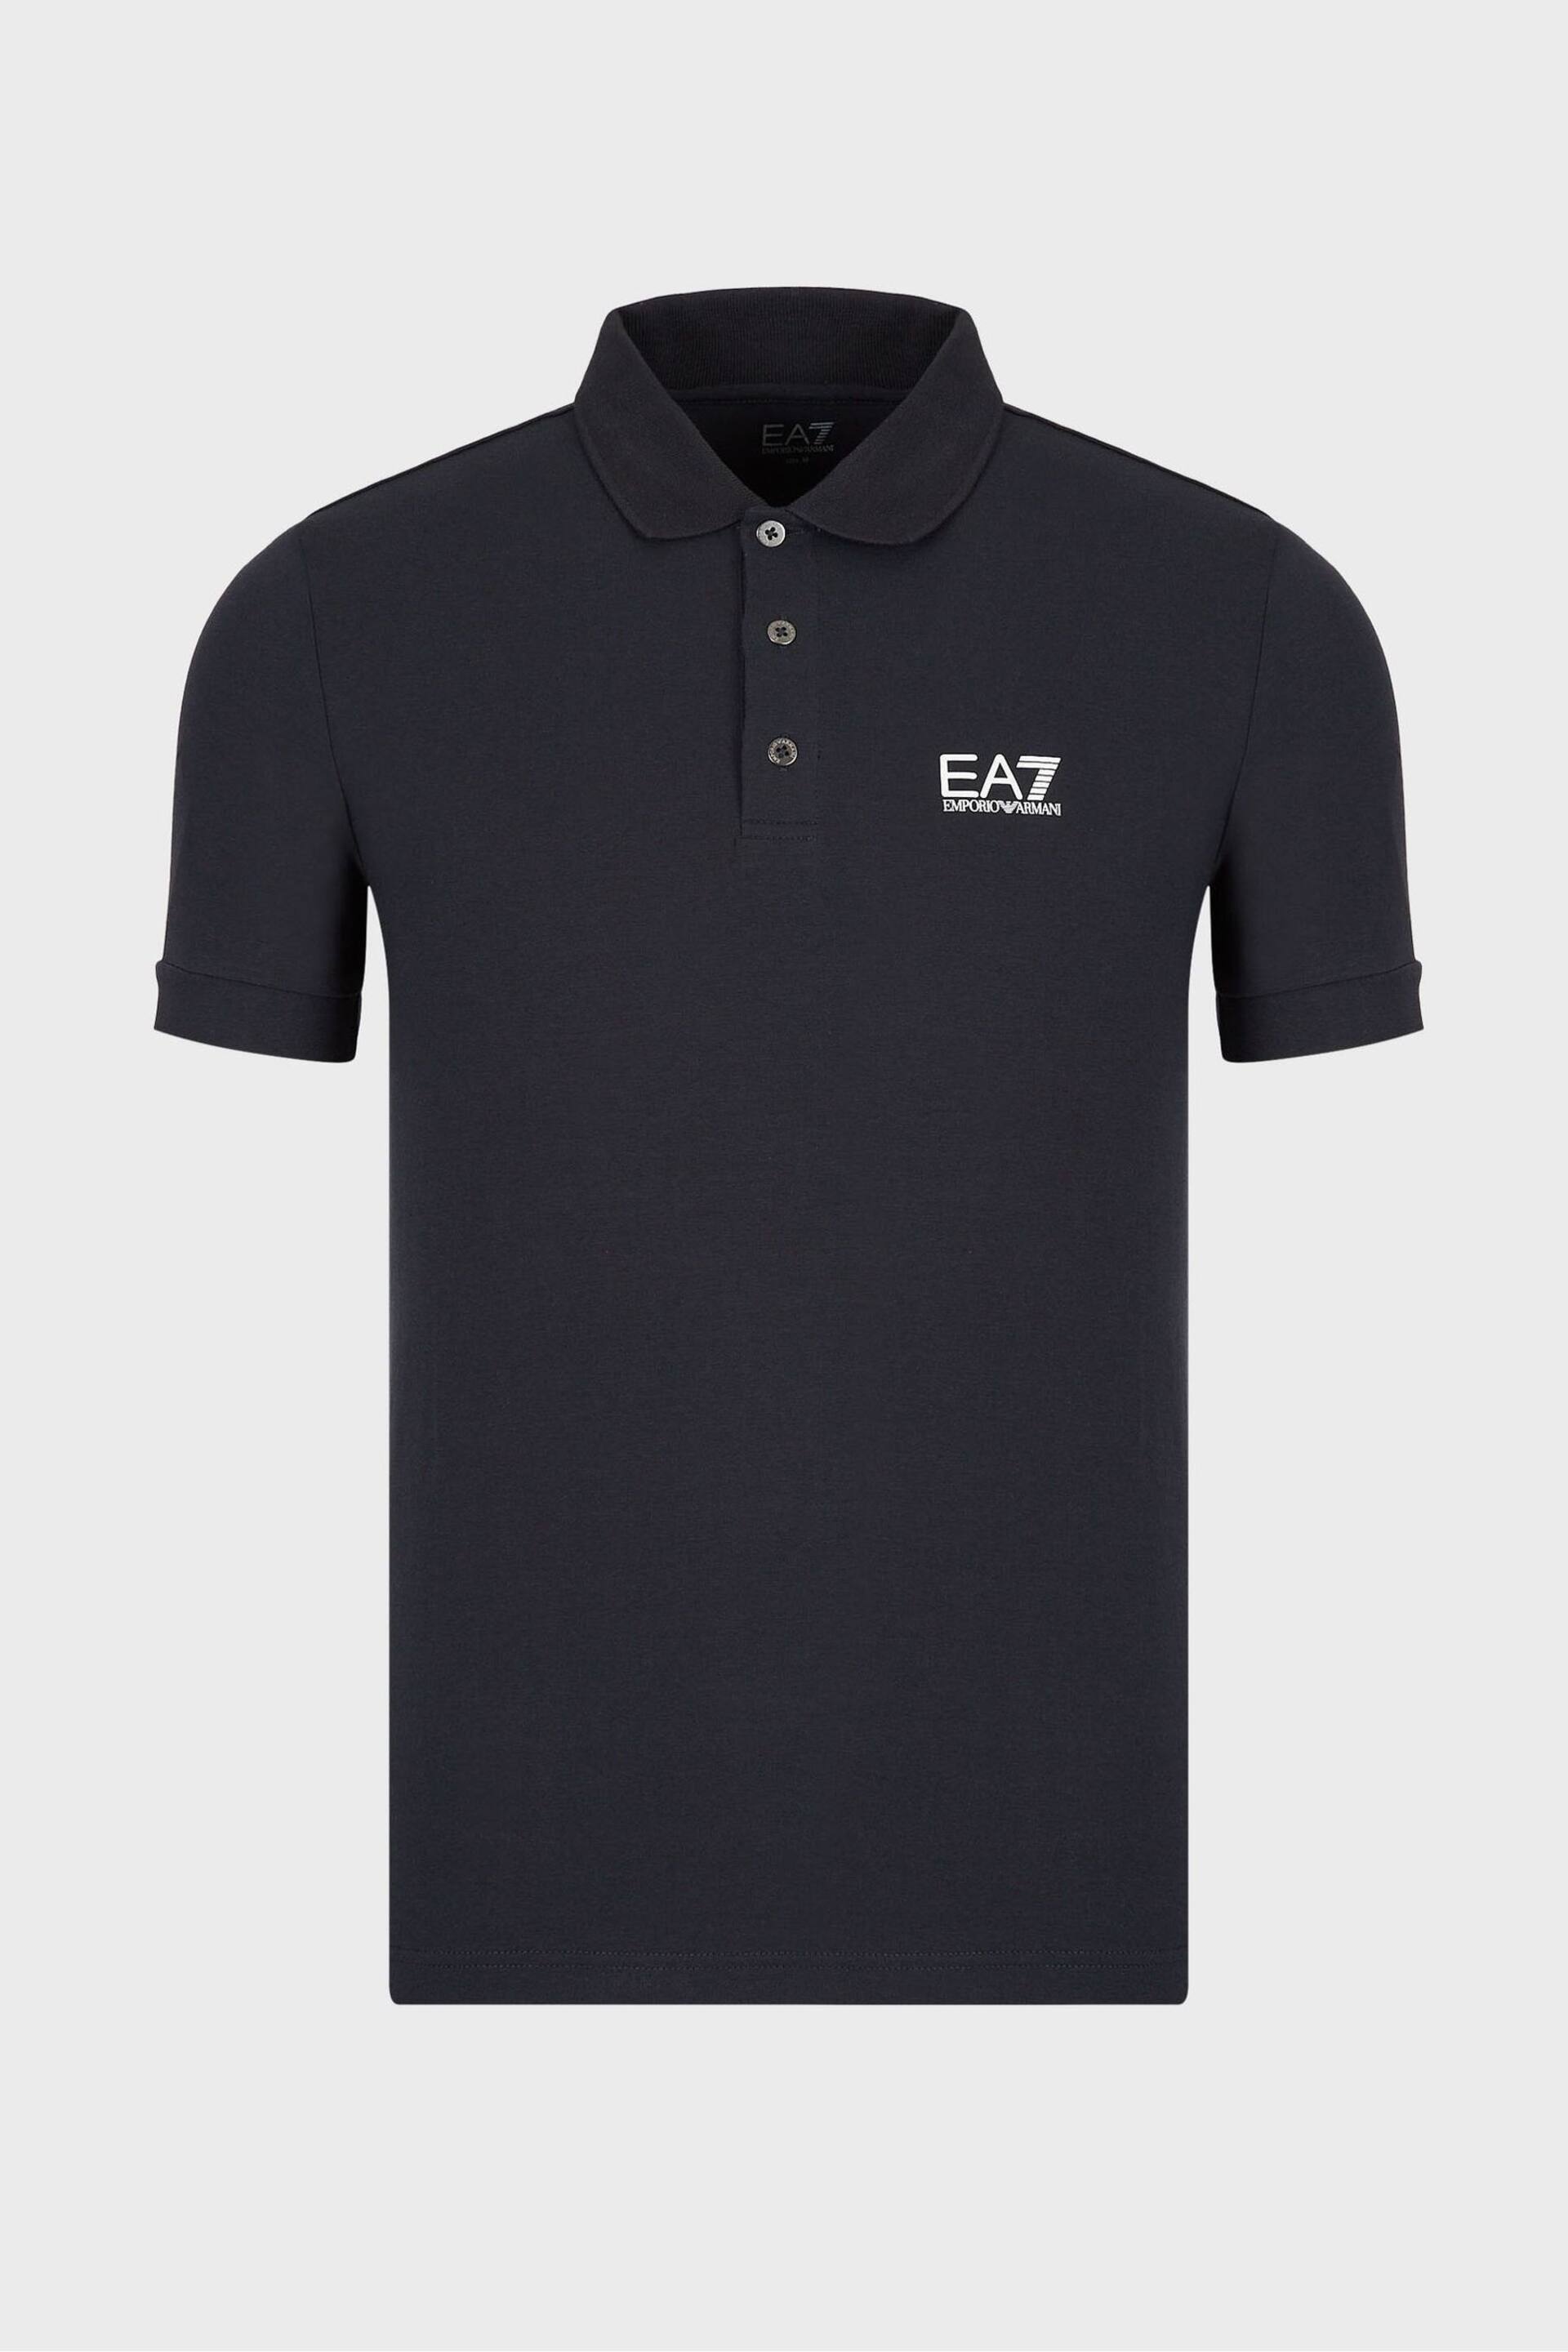 Emporio Armani EA7 Core ID Stretch Cotton Polo Shirt - Image 5 of 6